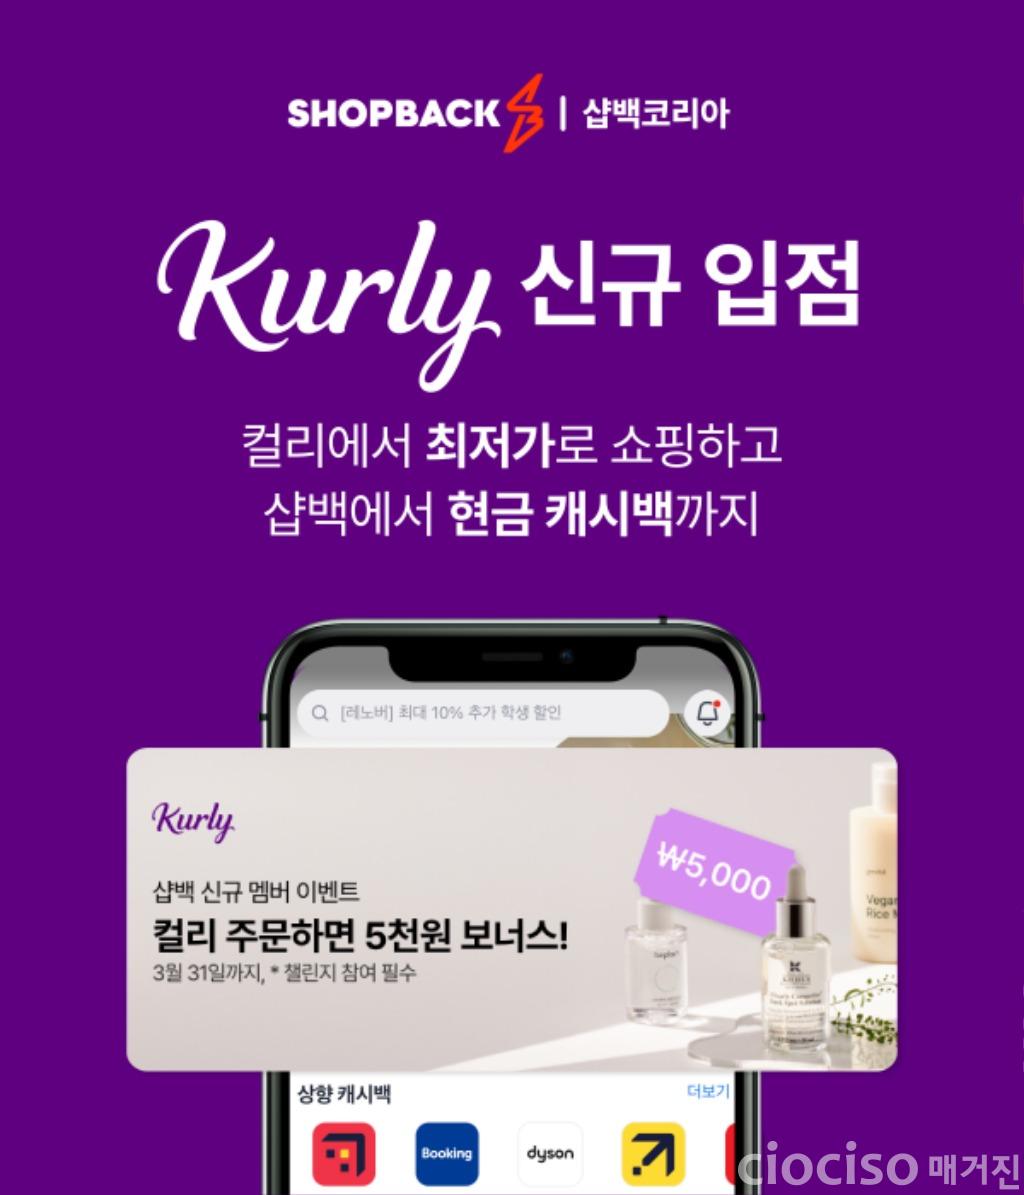 PR Shopback Kurly – 1 (1).jpg